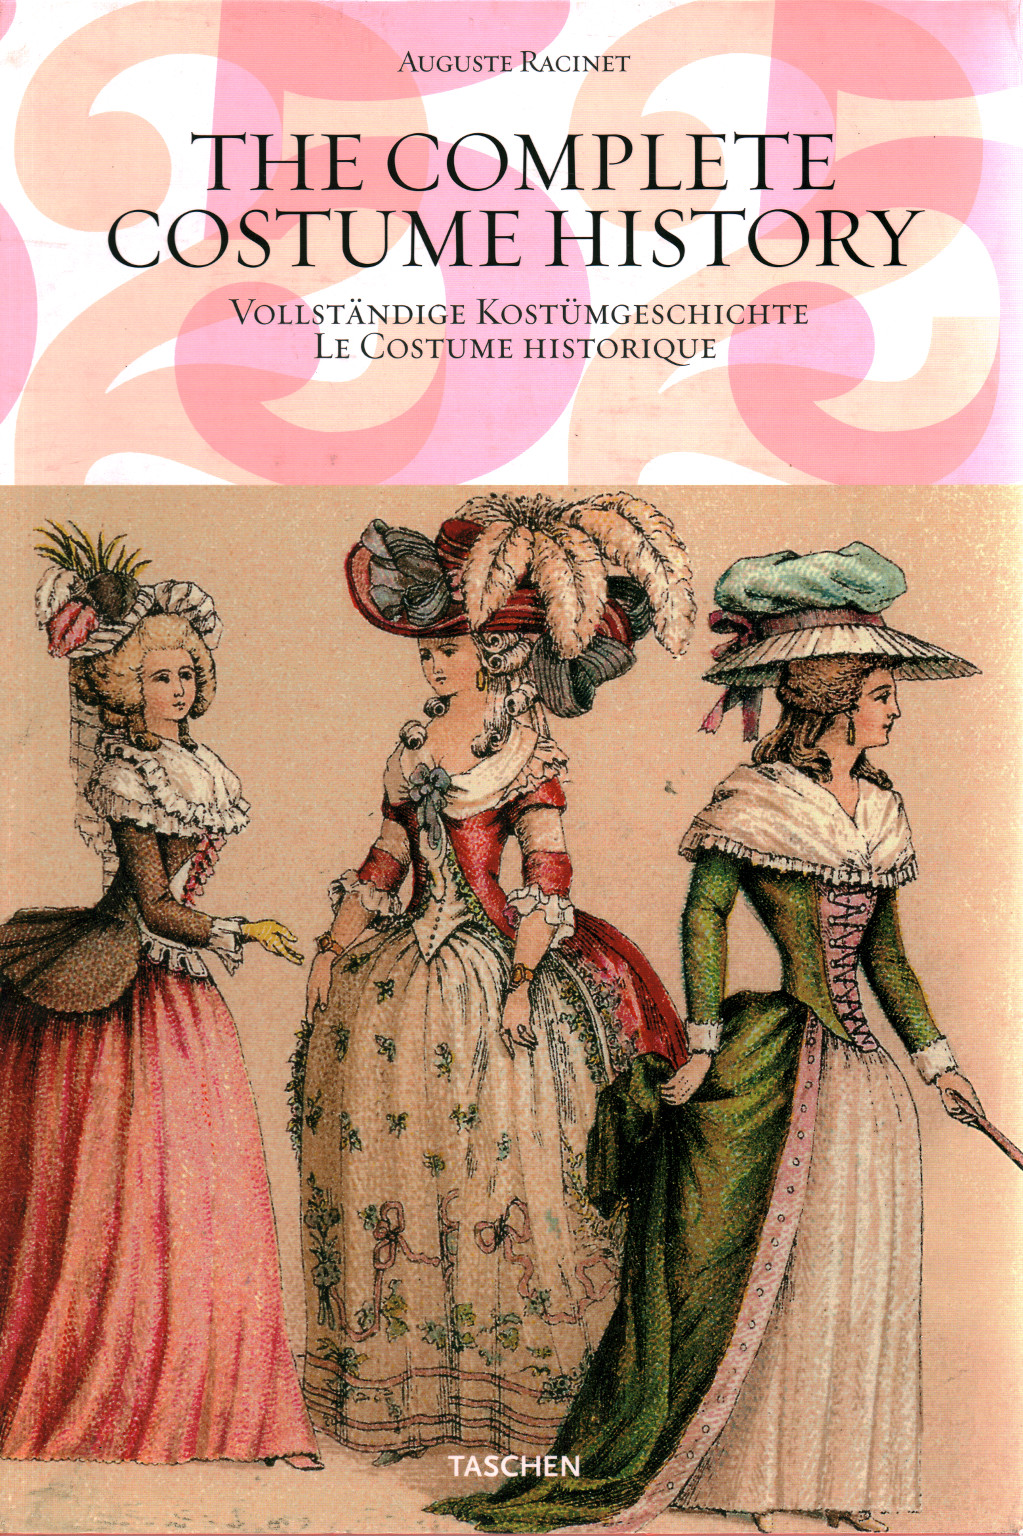 The Complete Costume History / Vollständige Kost